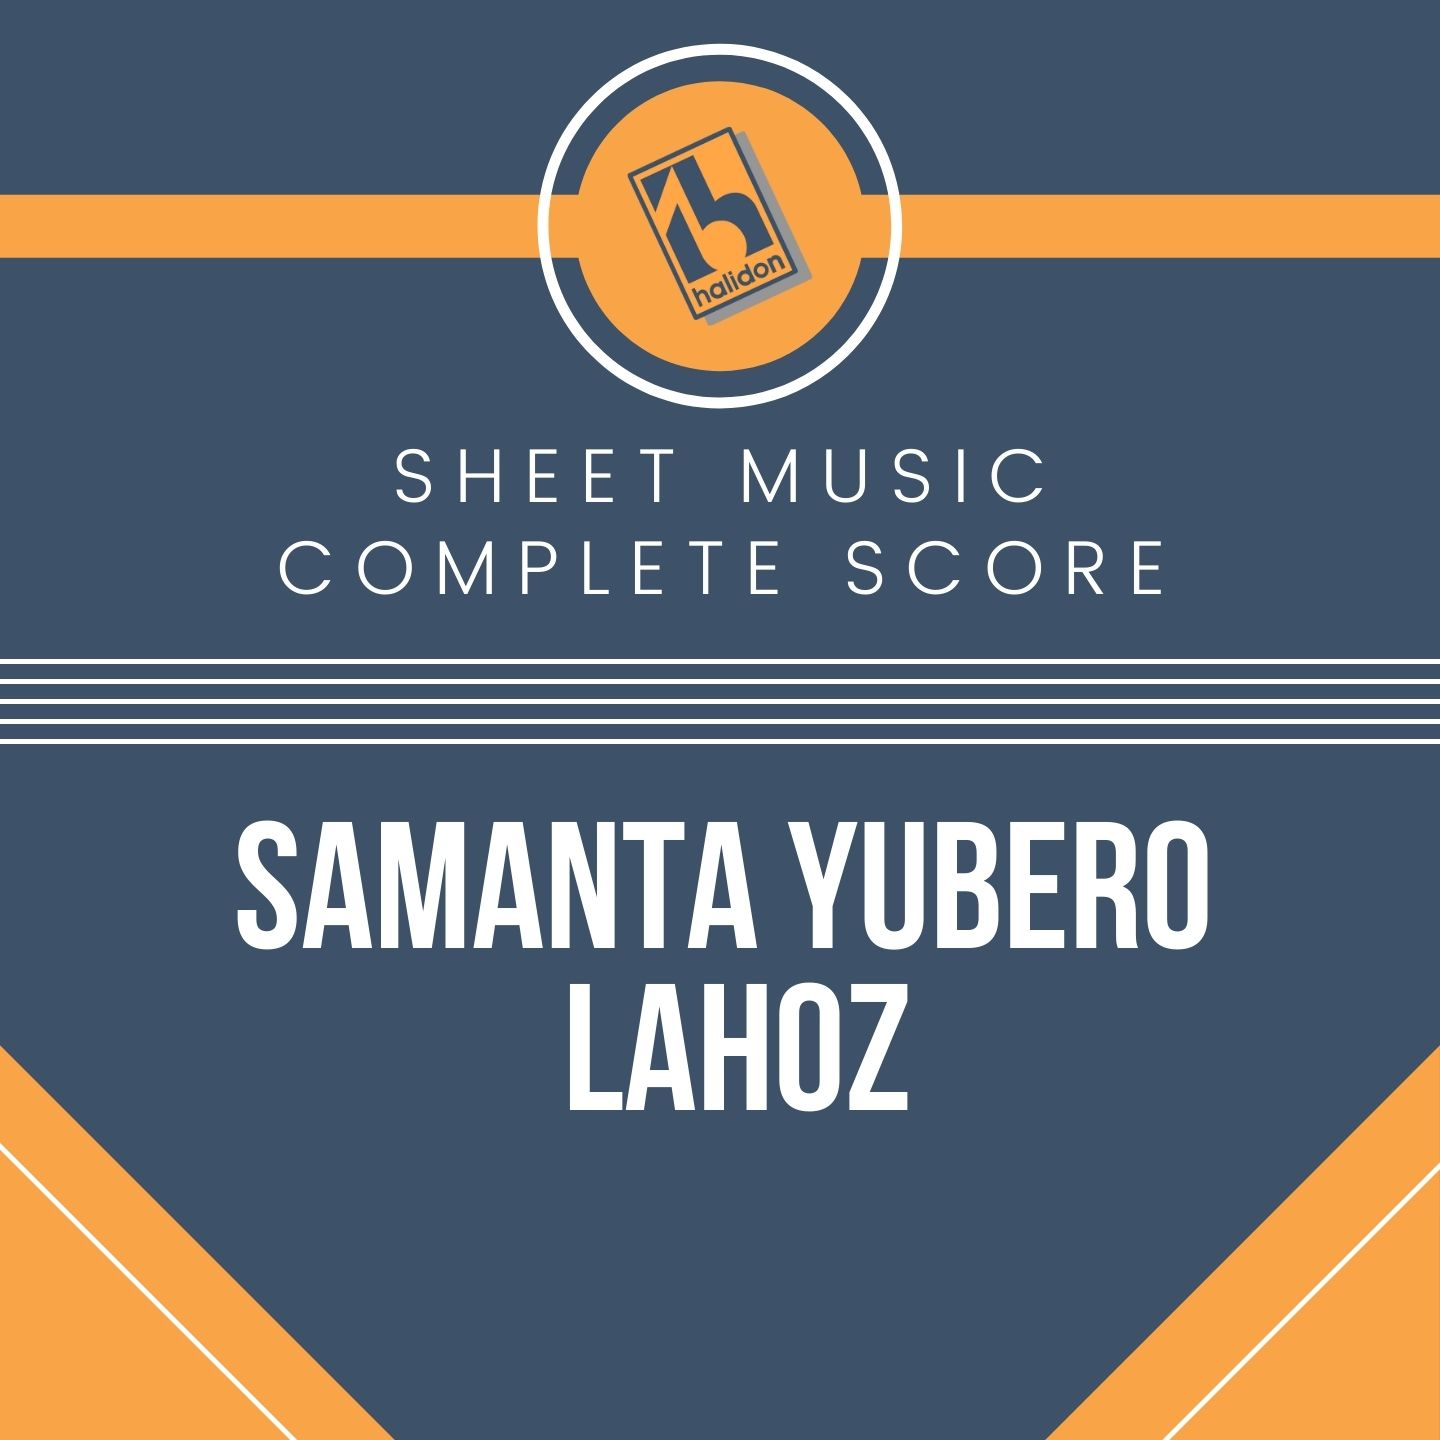 Samanta Yubero Lahoz - Partiture complete